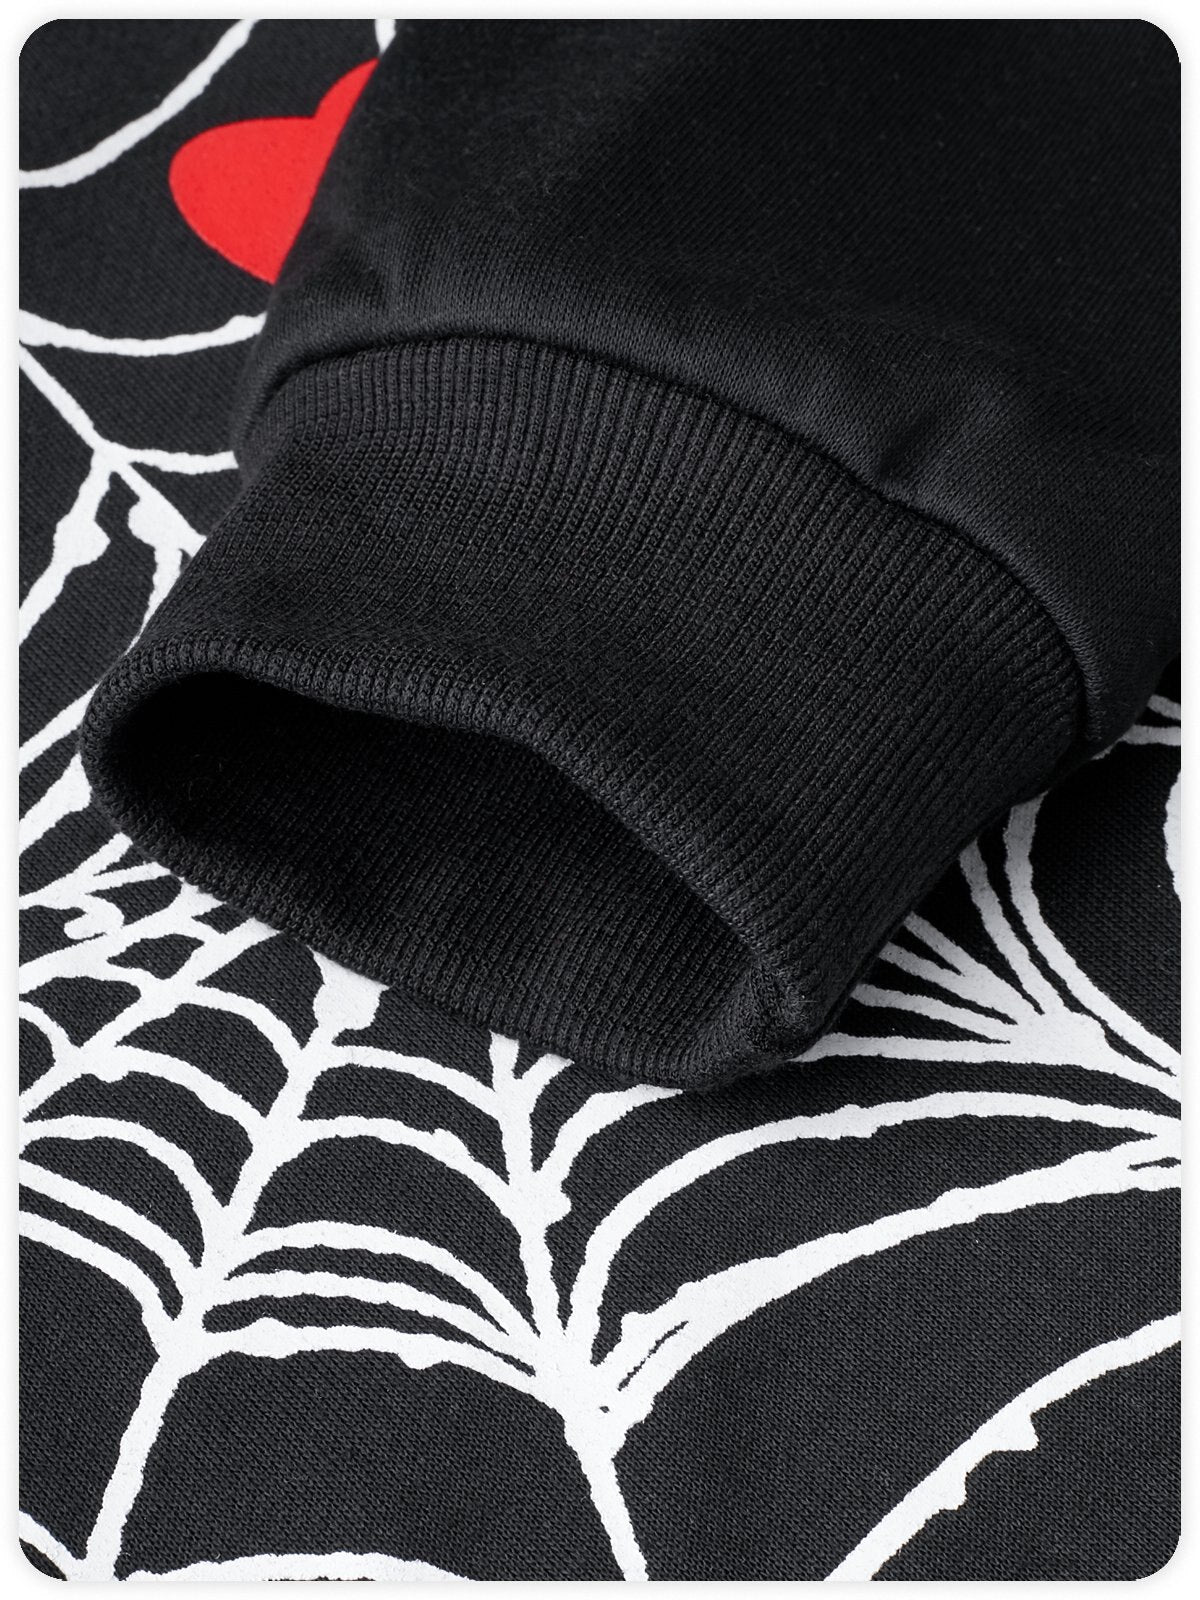 Spider Heart Crop Top Sweater